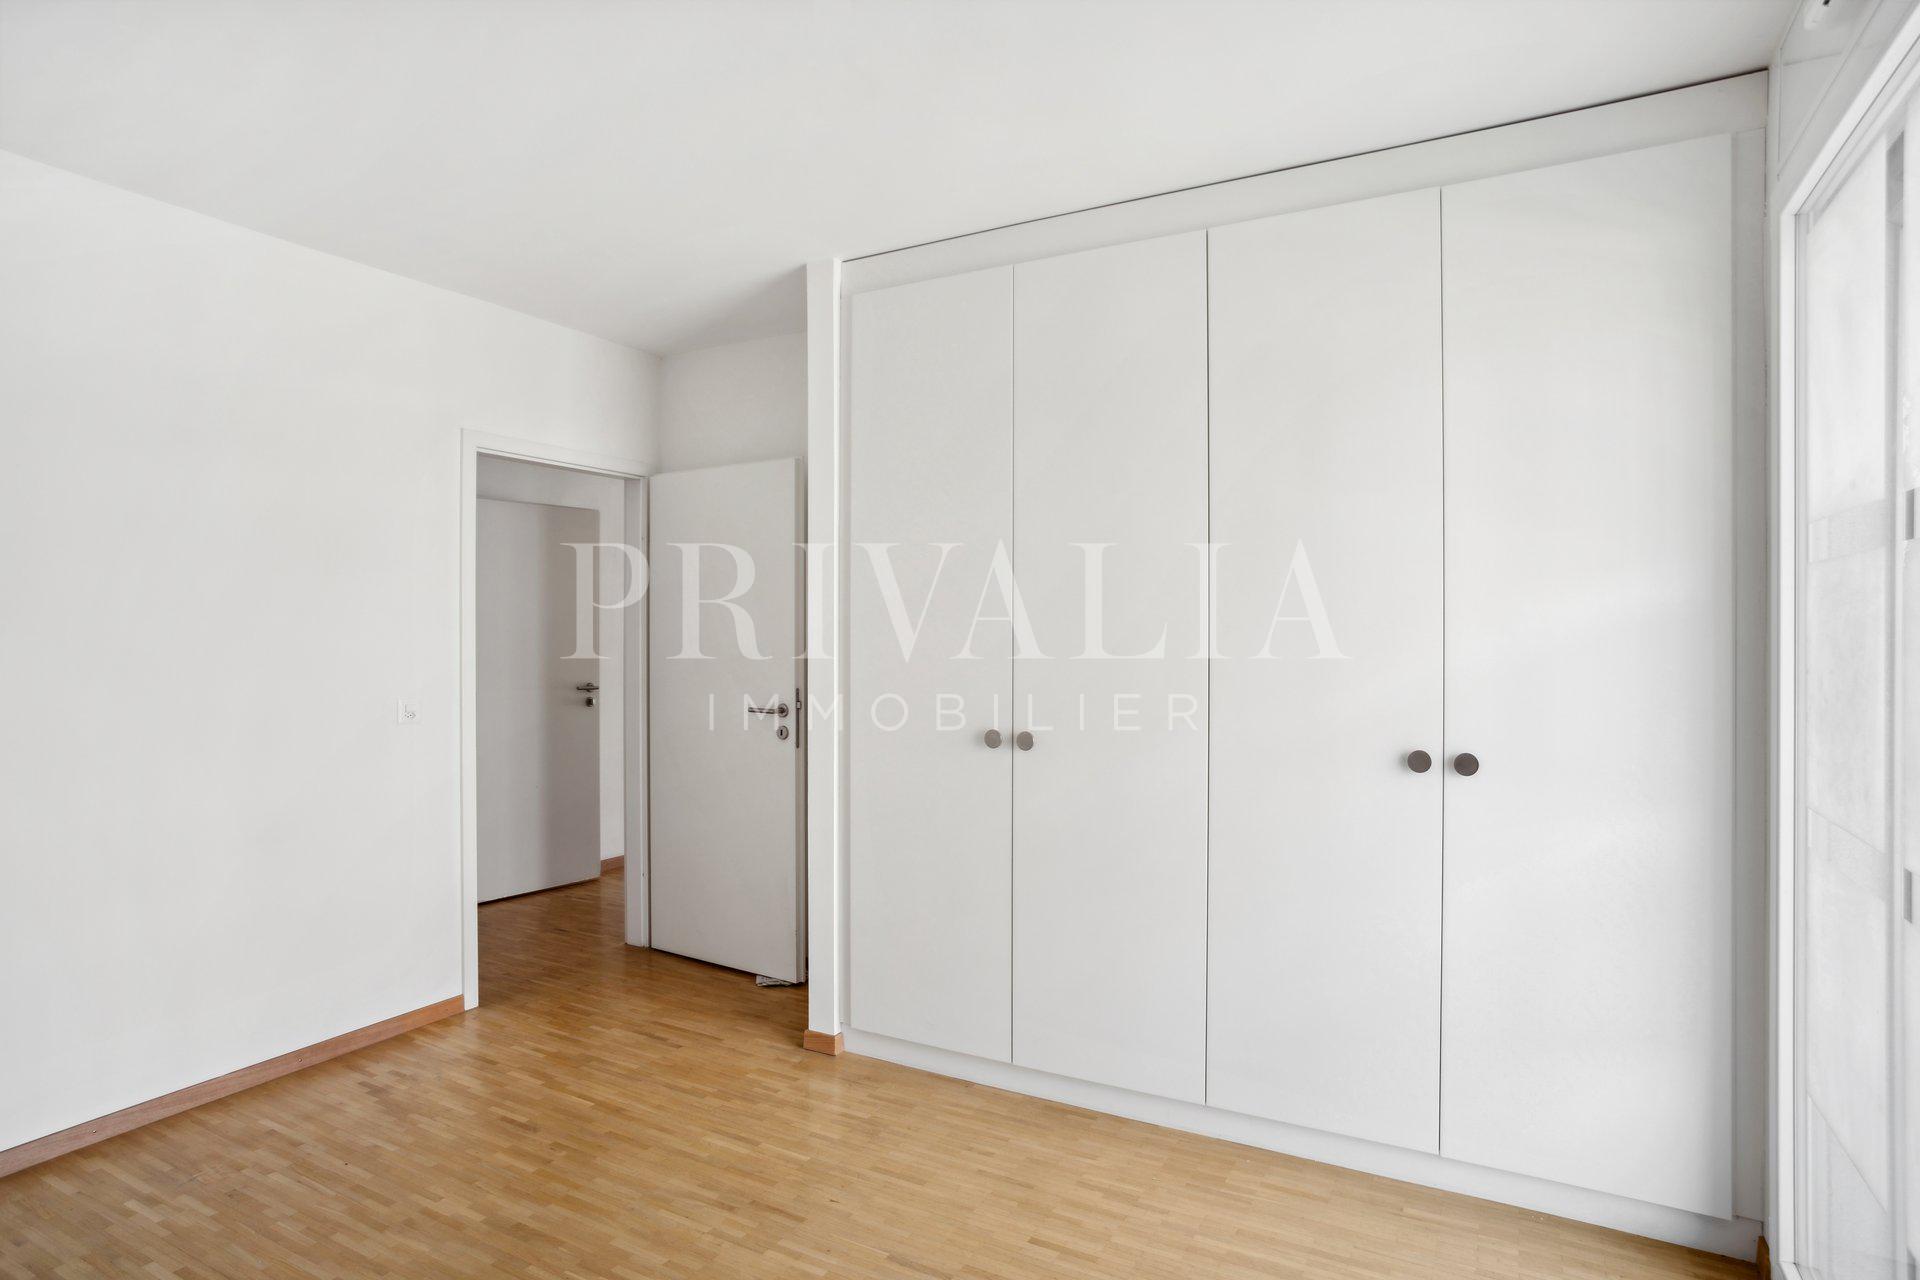 PrivaliaExclusive: 5-room apartment of 123 m2 with balconies